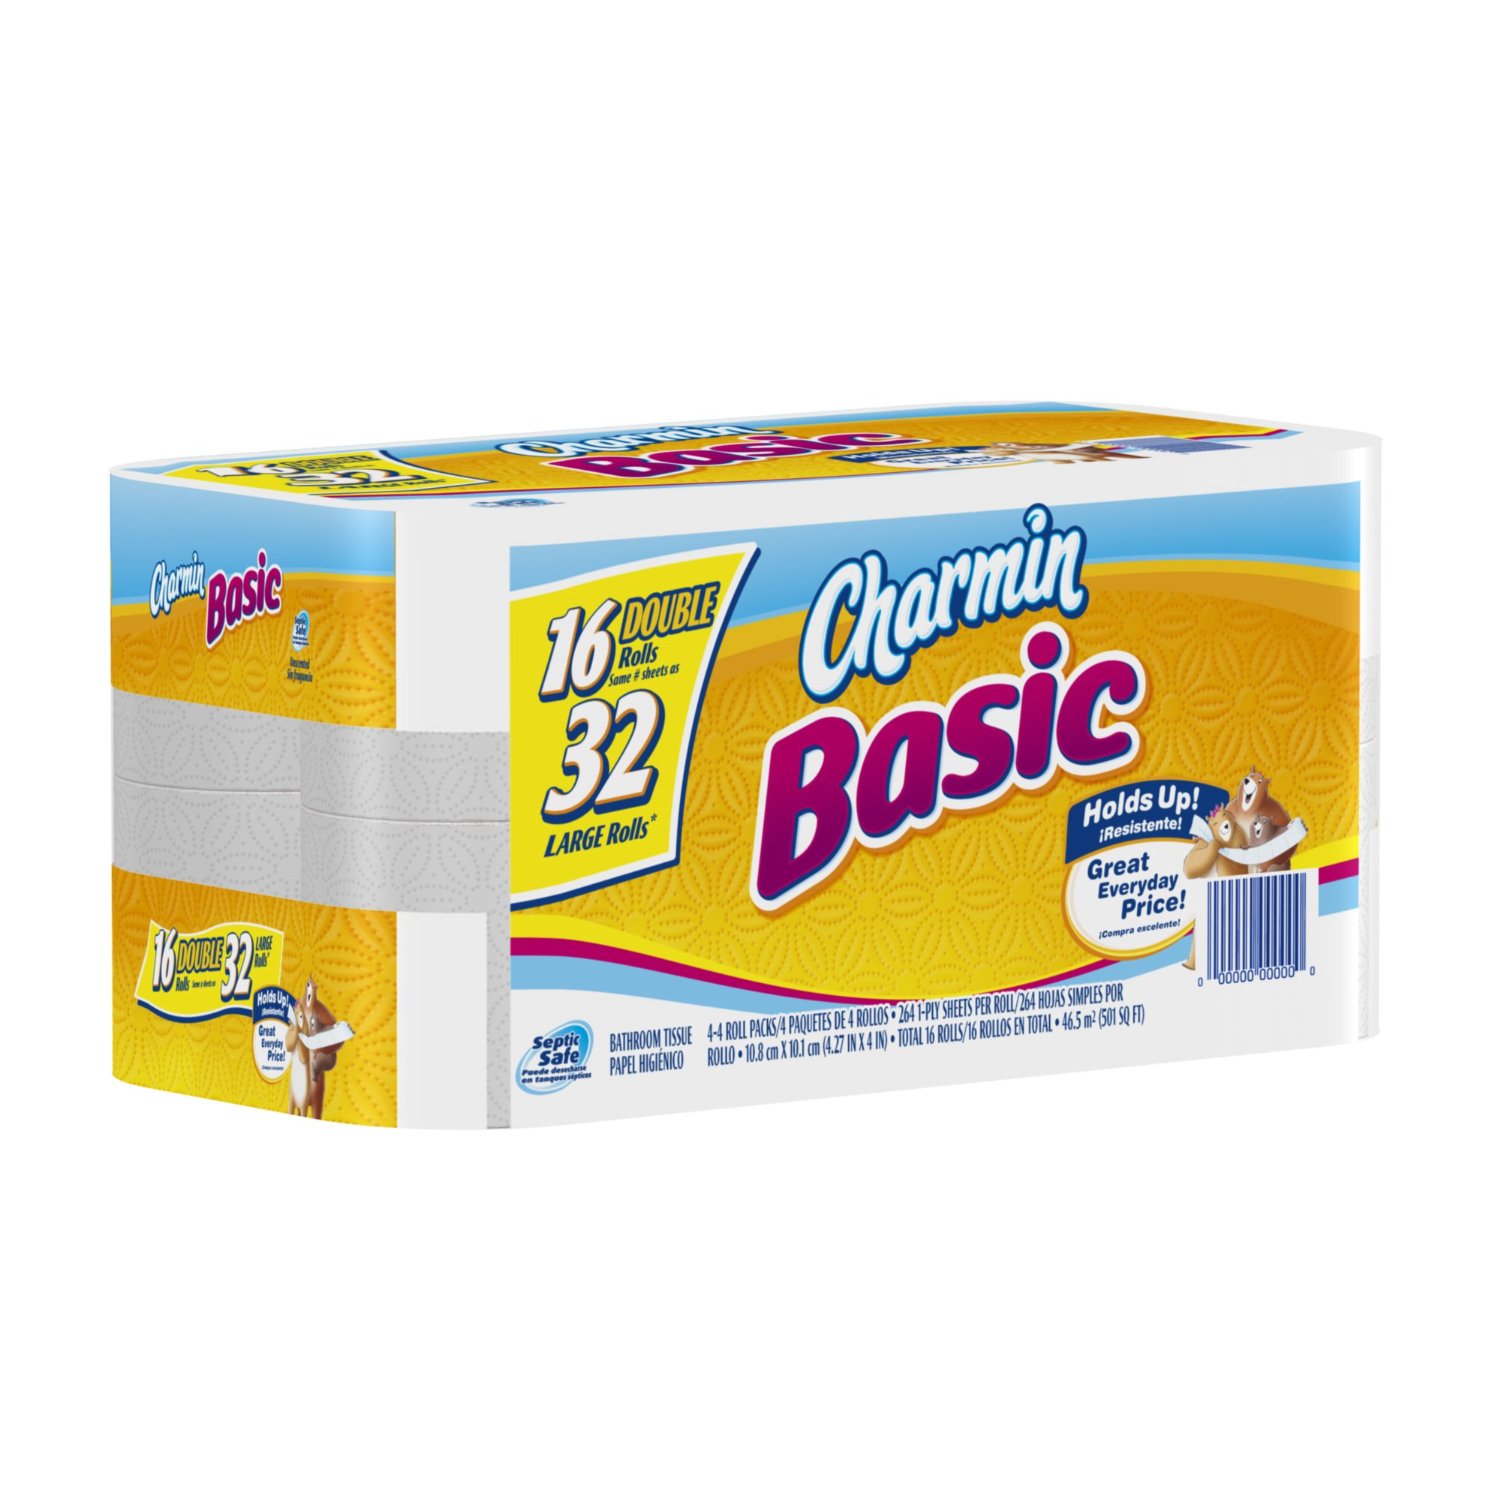 Charmin Basic Toilet Paper 32 Double Rolls $10.18